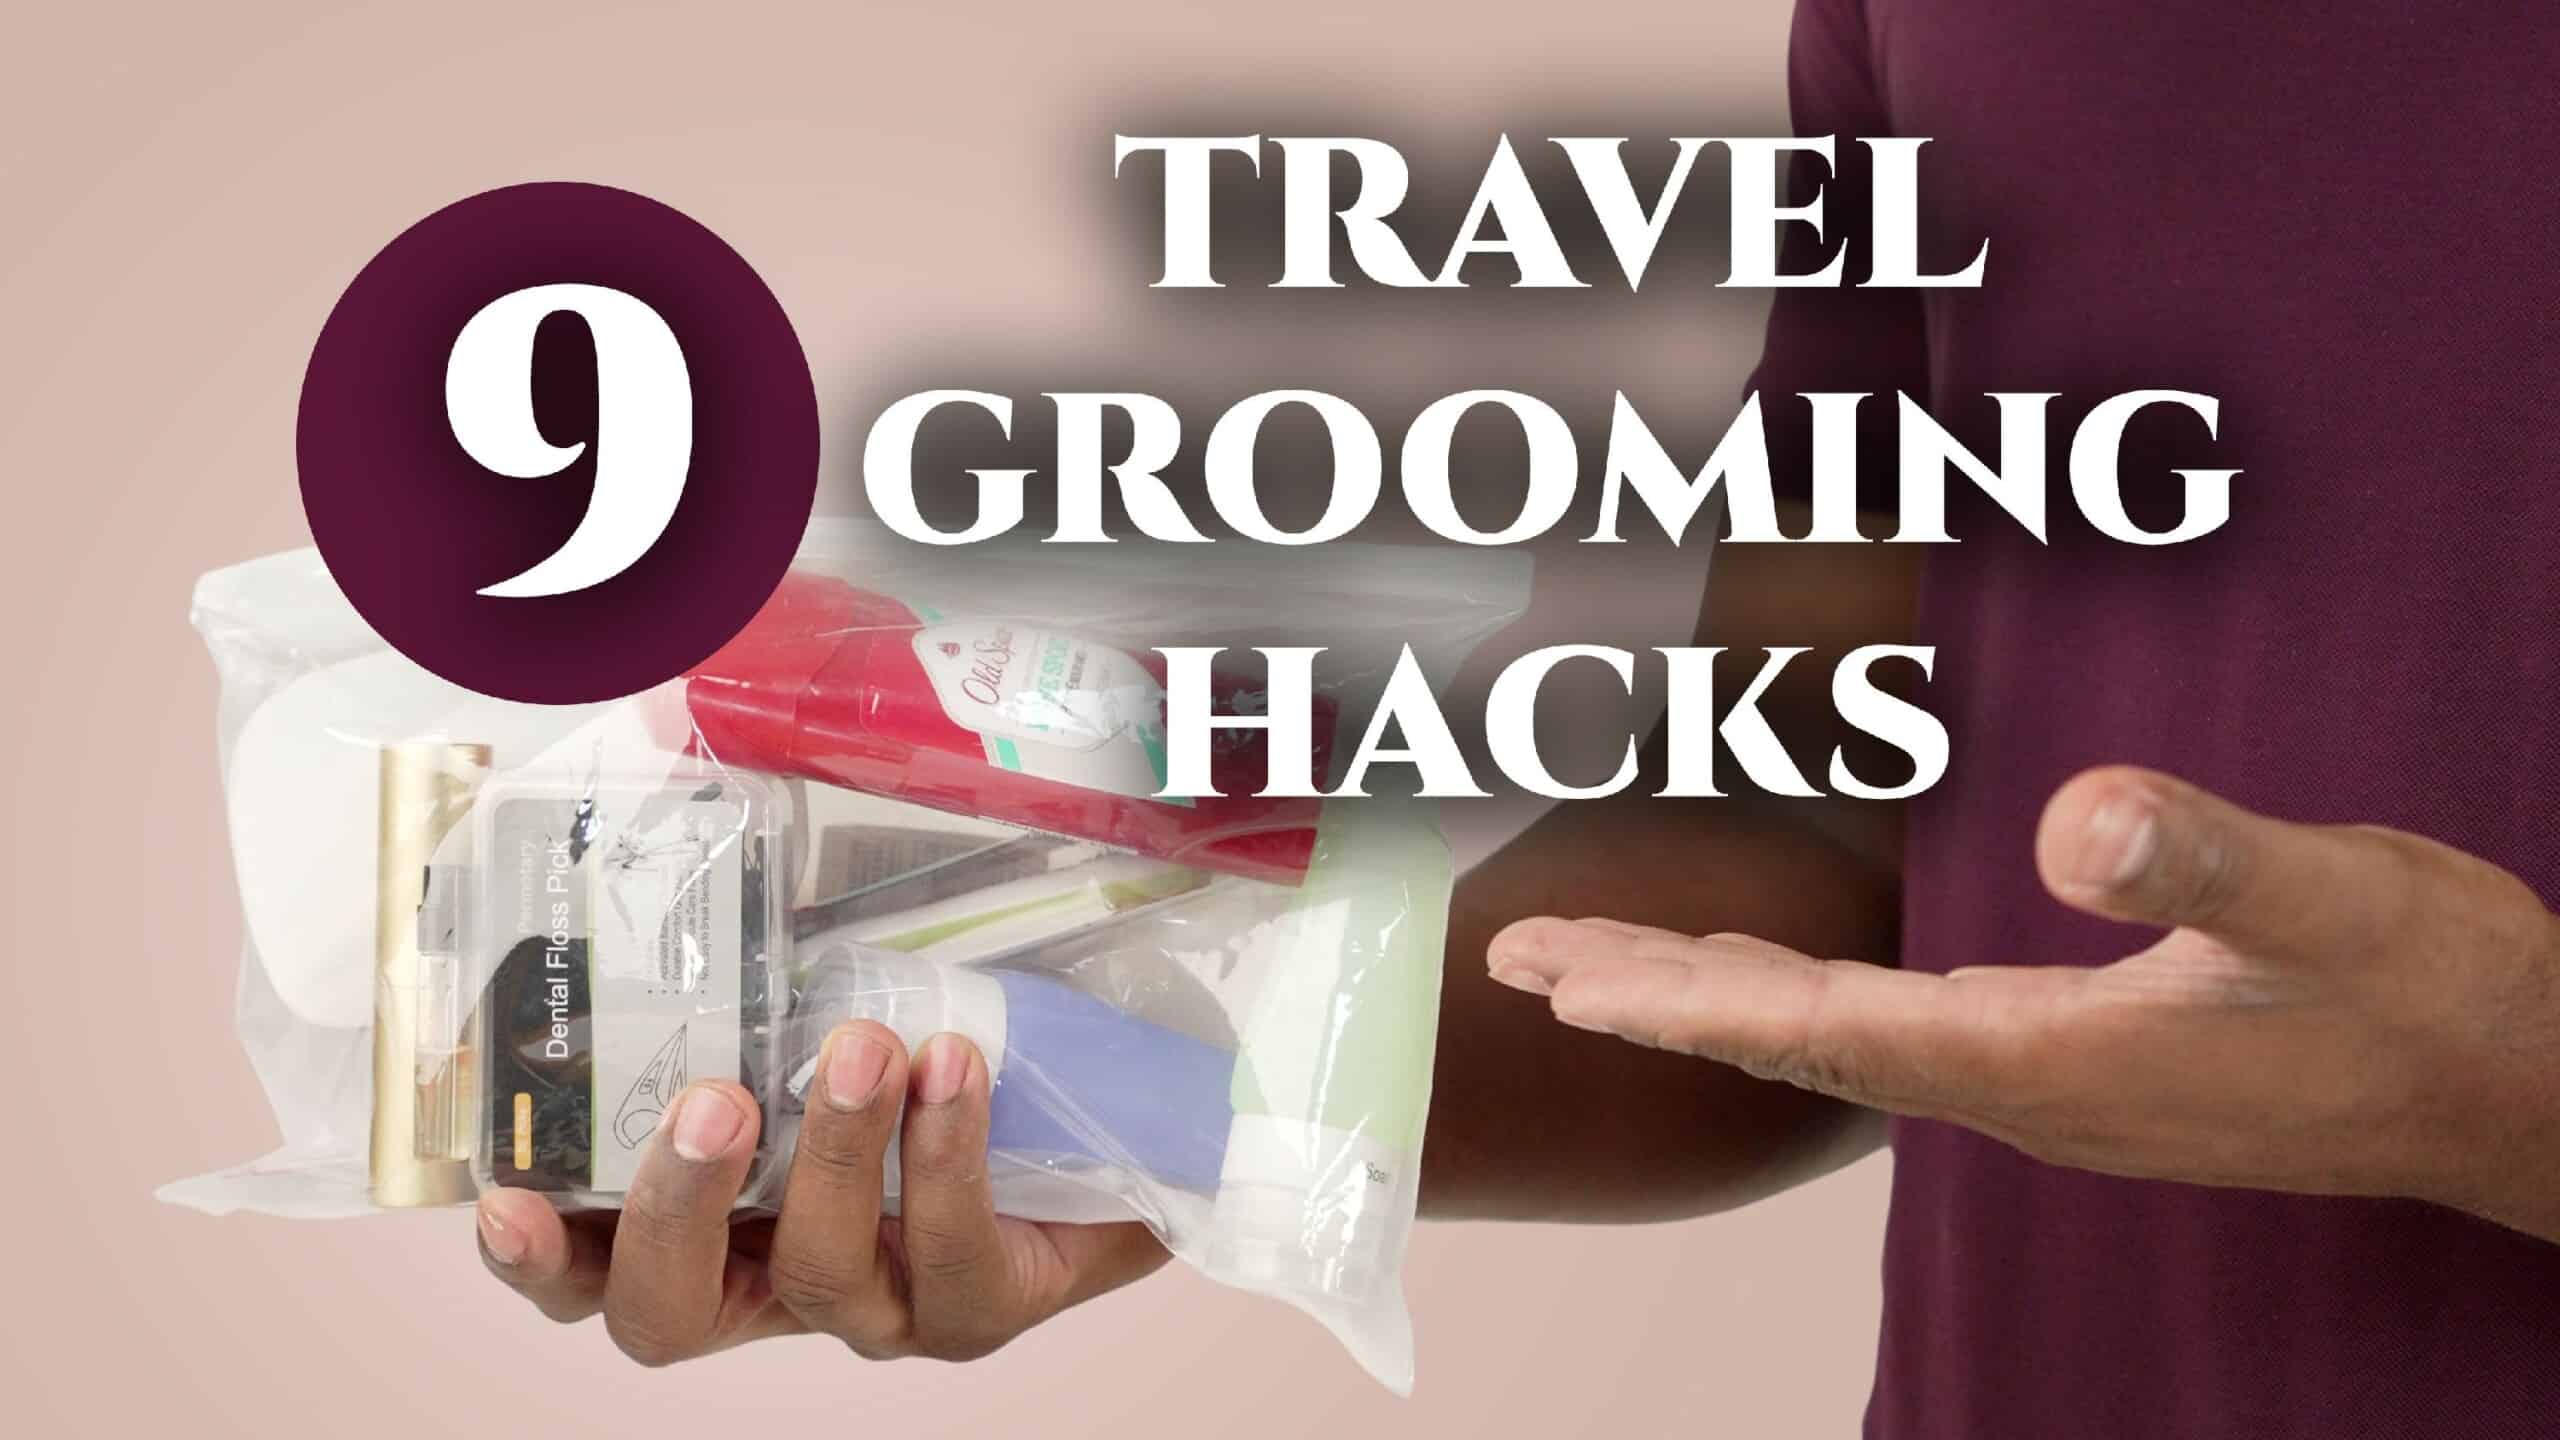 9 Grooming Hacks For The Traveling Gentleman (+TSA Tips!)